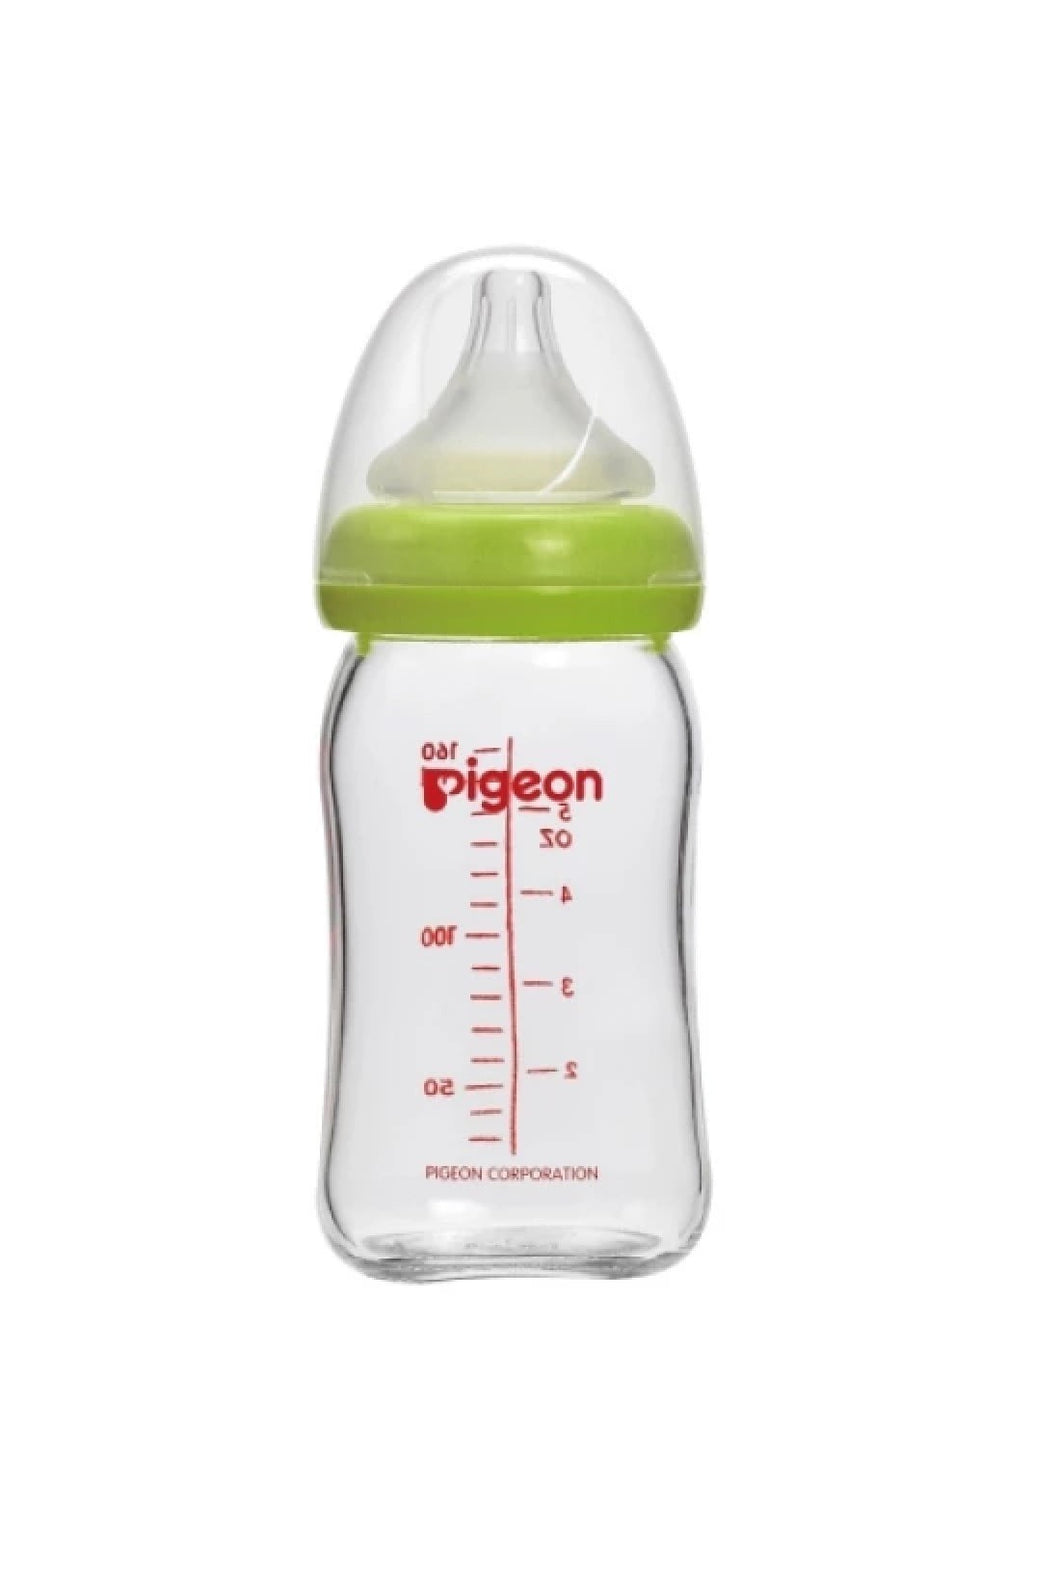 Pigeon Peristaltic Plus Nursing Milk Bottle 160ml 1